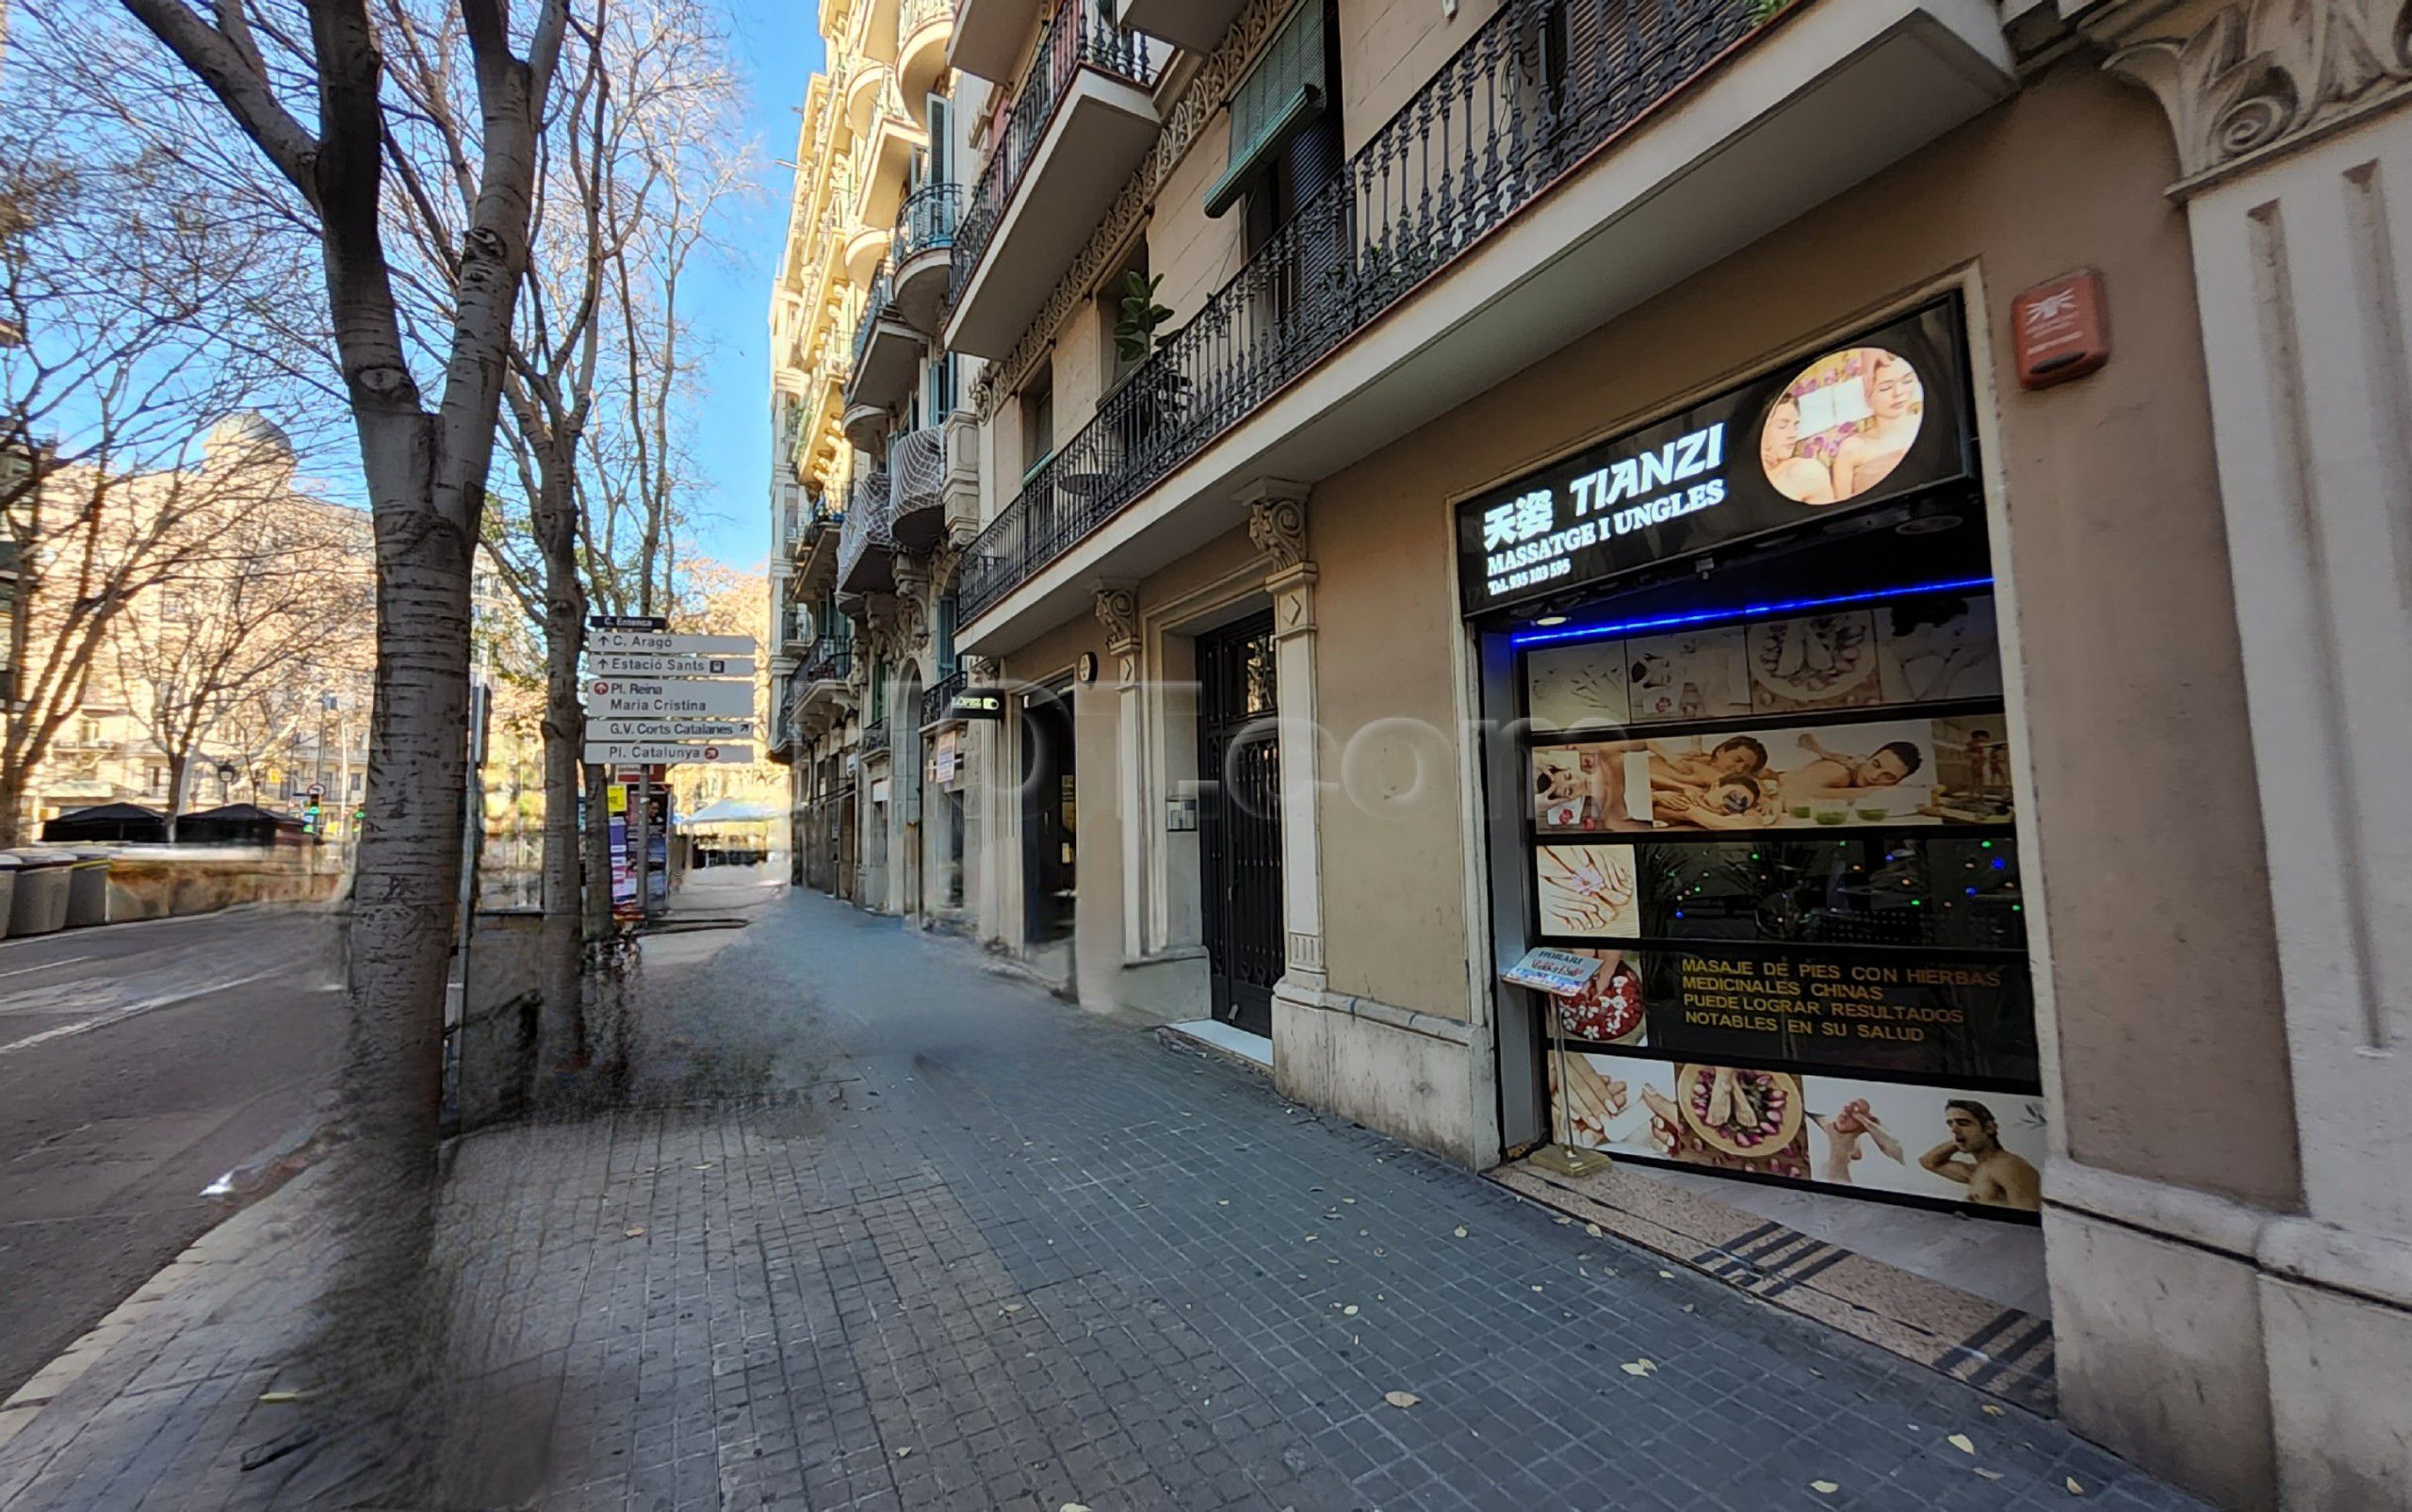 Barcelona, Spain Tianzi Messatge Ungles